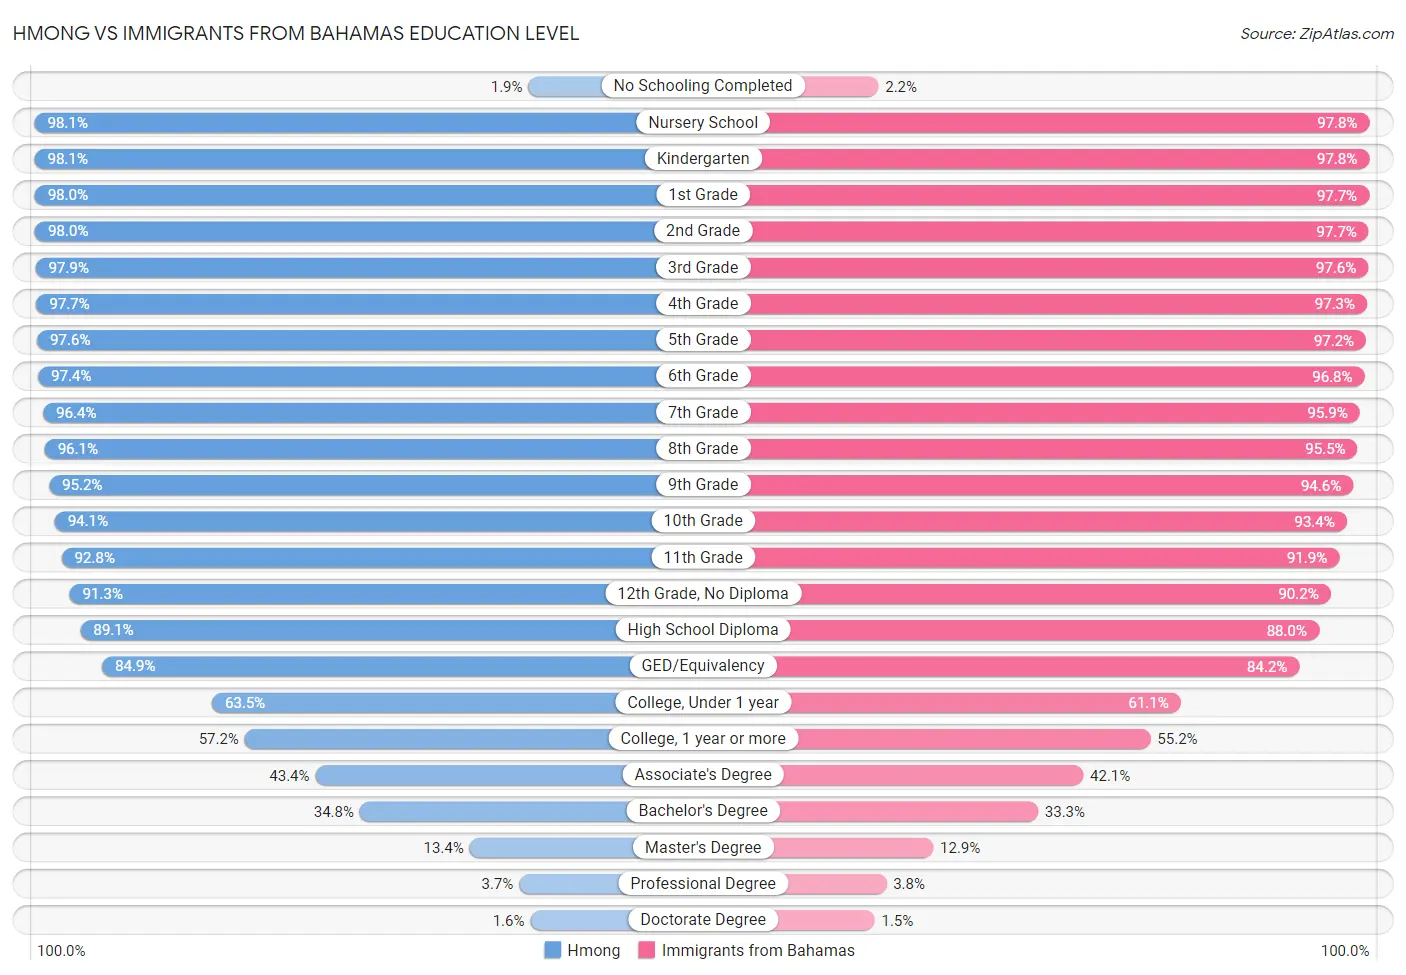 Hmong vs Immigrants from Bahamas Education Level